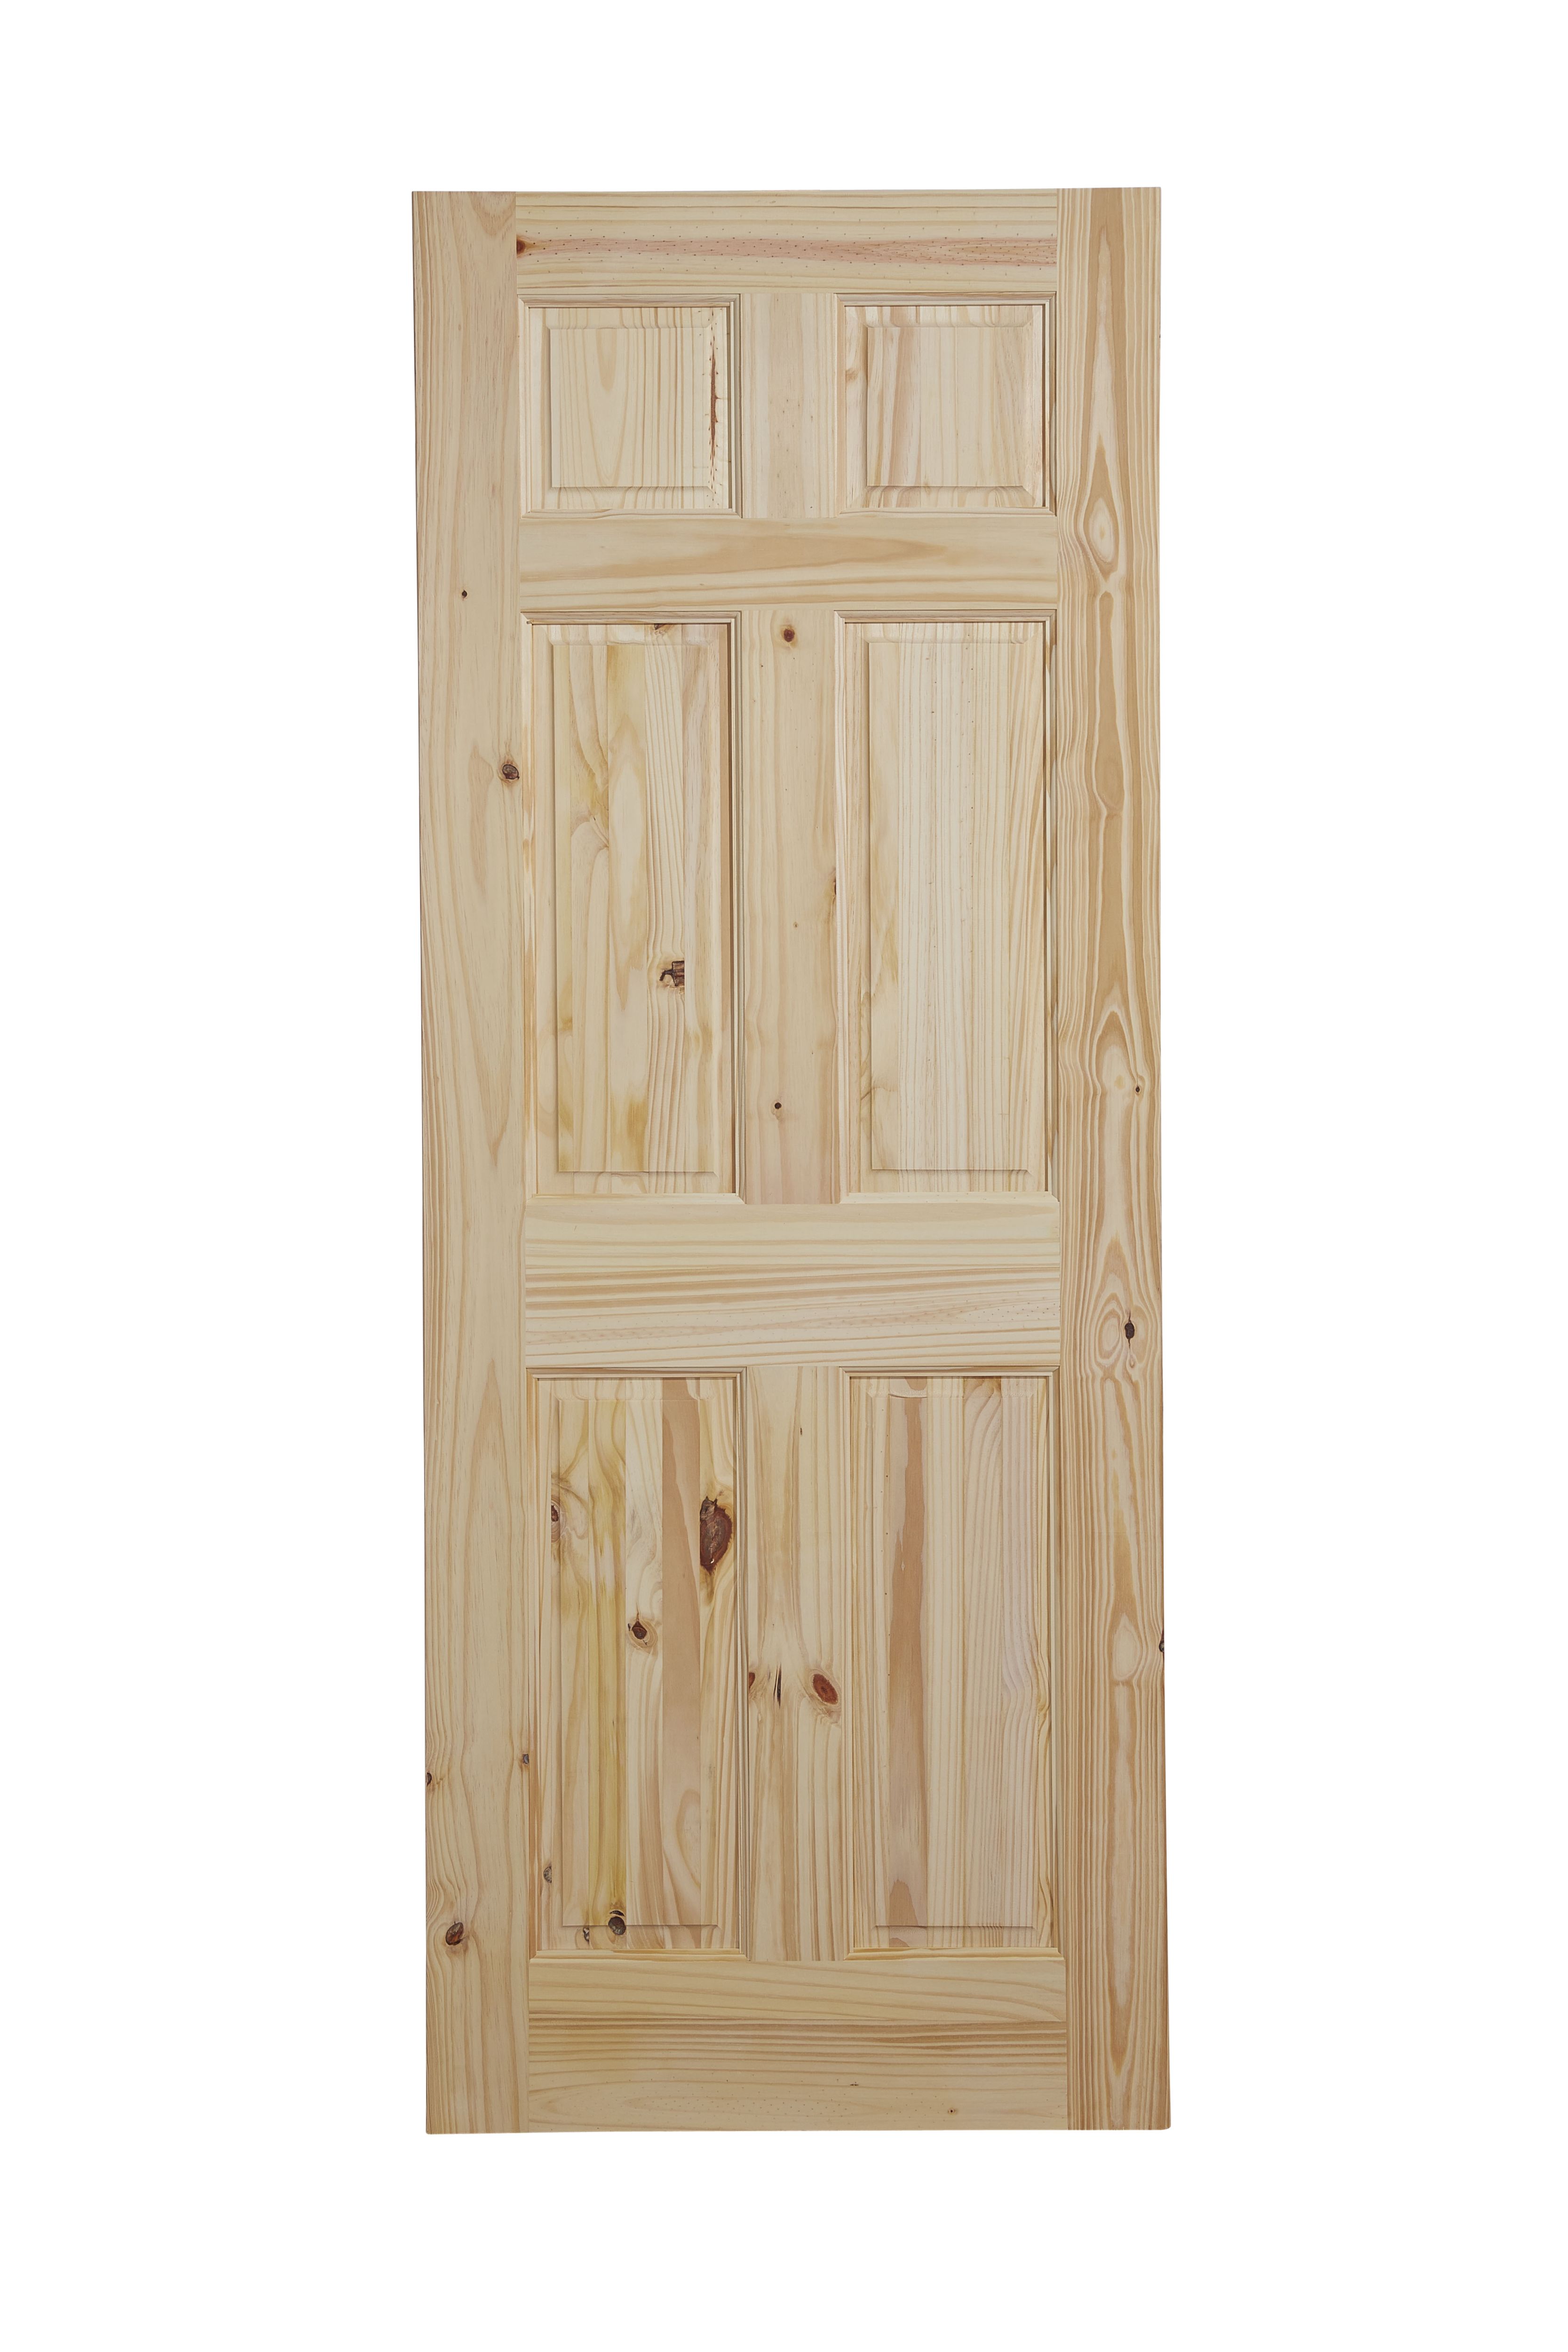 6 Panel Knotty Pine Internal Standard Door H 1981mm W 838mm Departments Diy At B Q